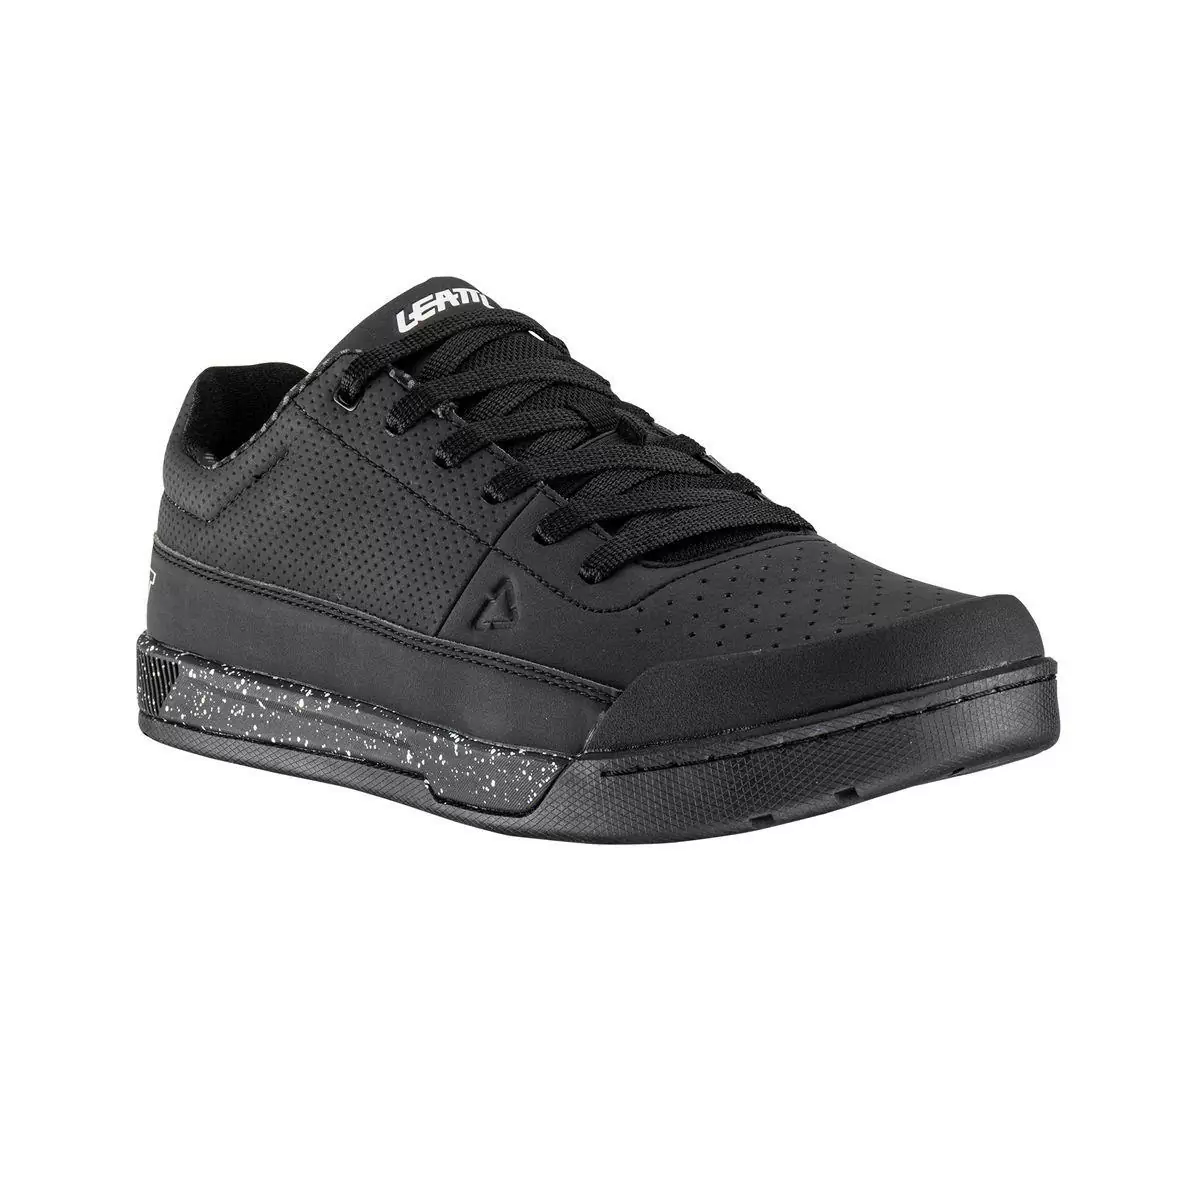 Mtb Shoes 2.0 Flat Black Size 45.5 #1